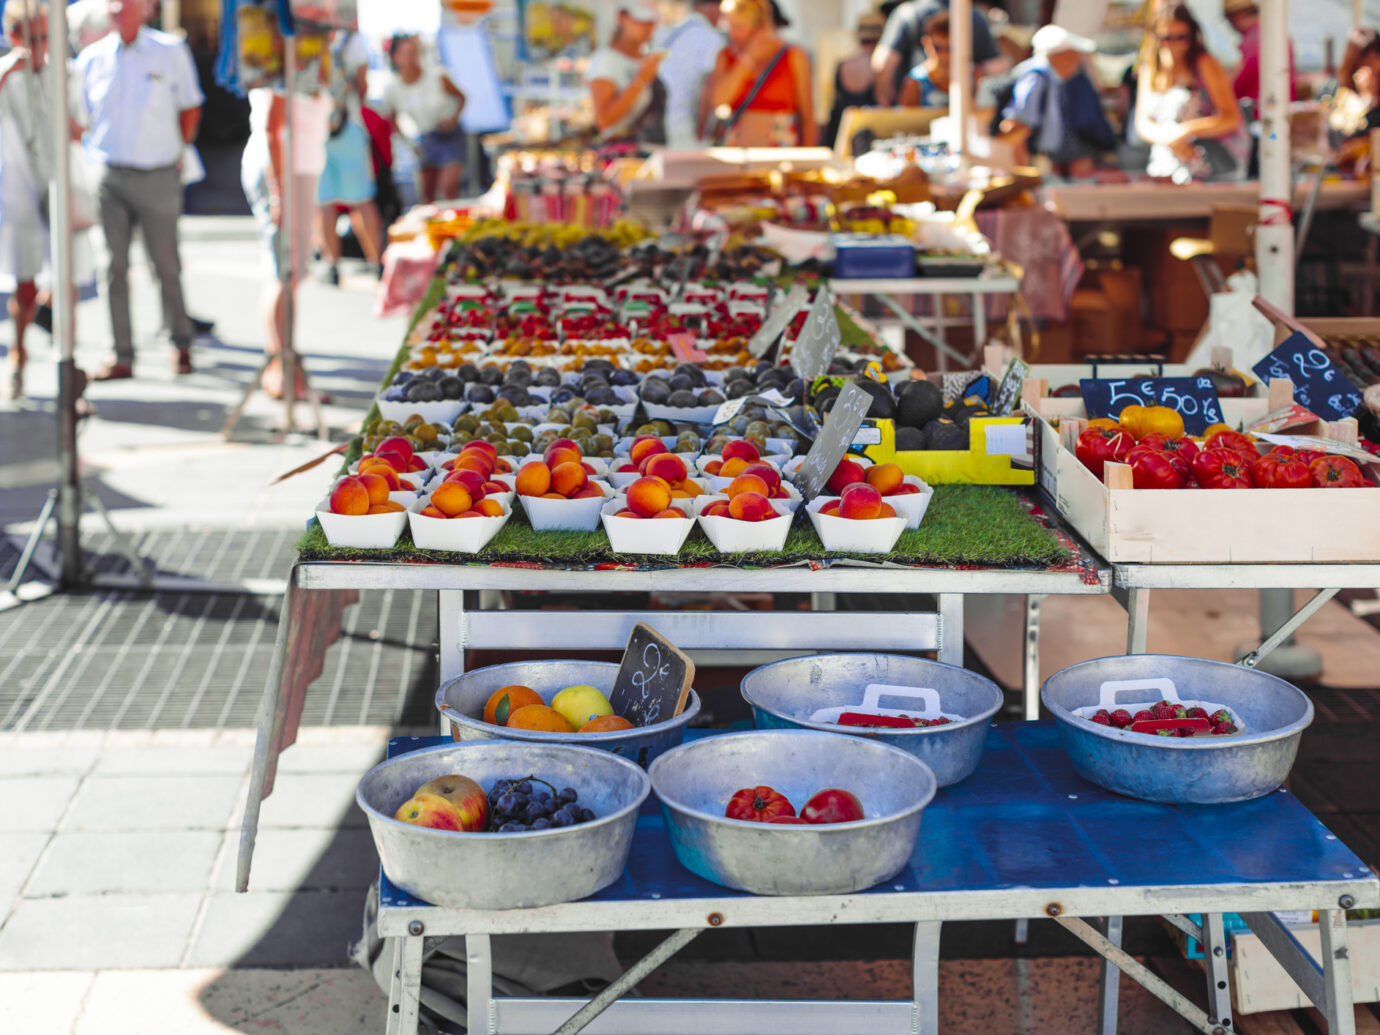 Cours Saleya flower market in Nice, France